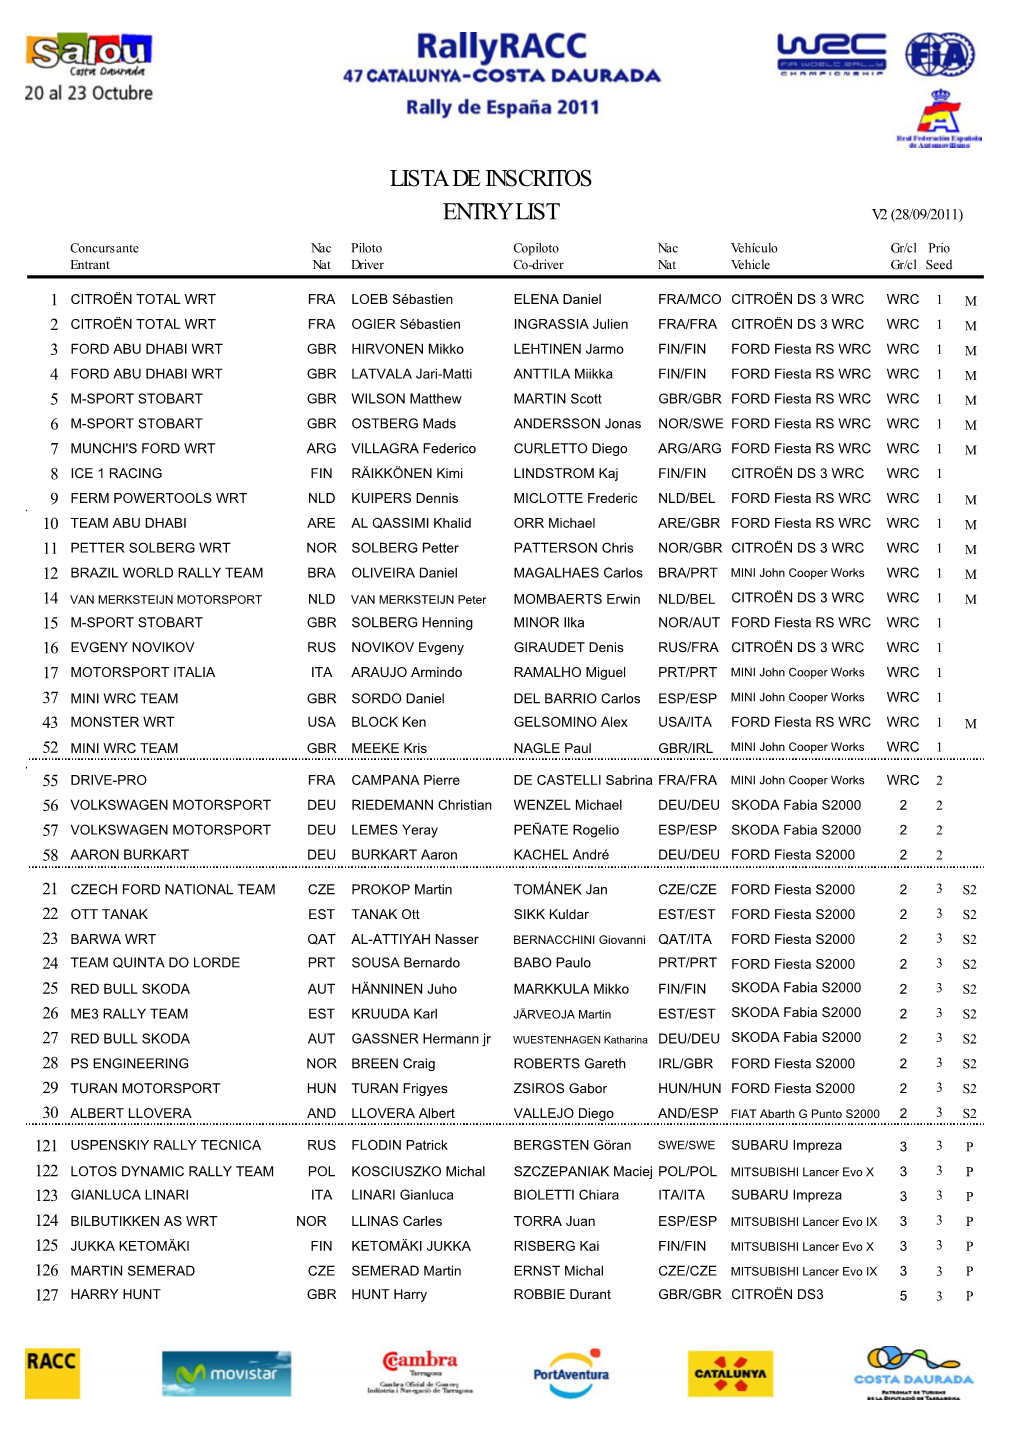 V2 2011 Rallyracc Entry List Approved By